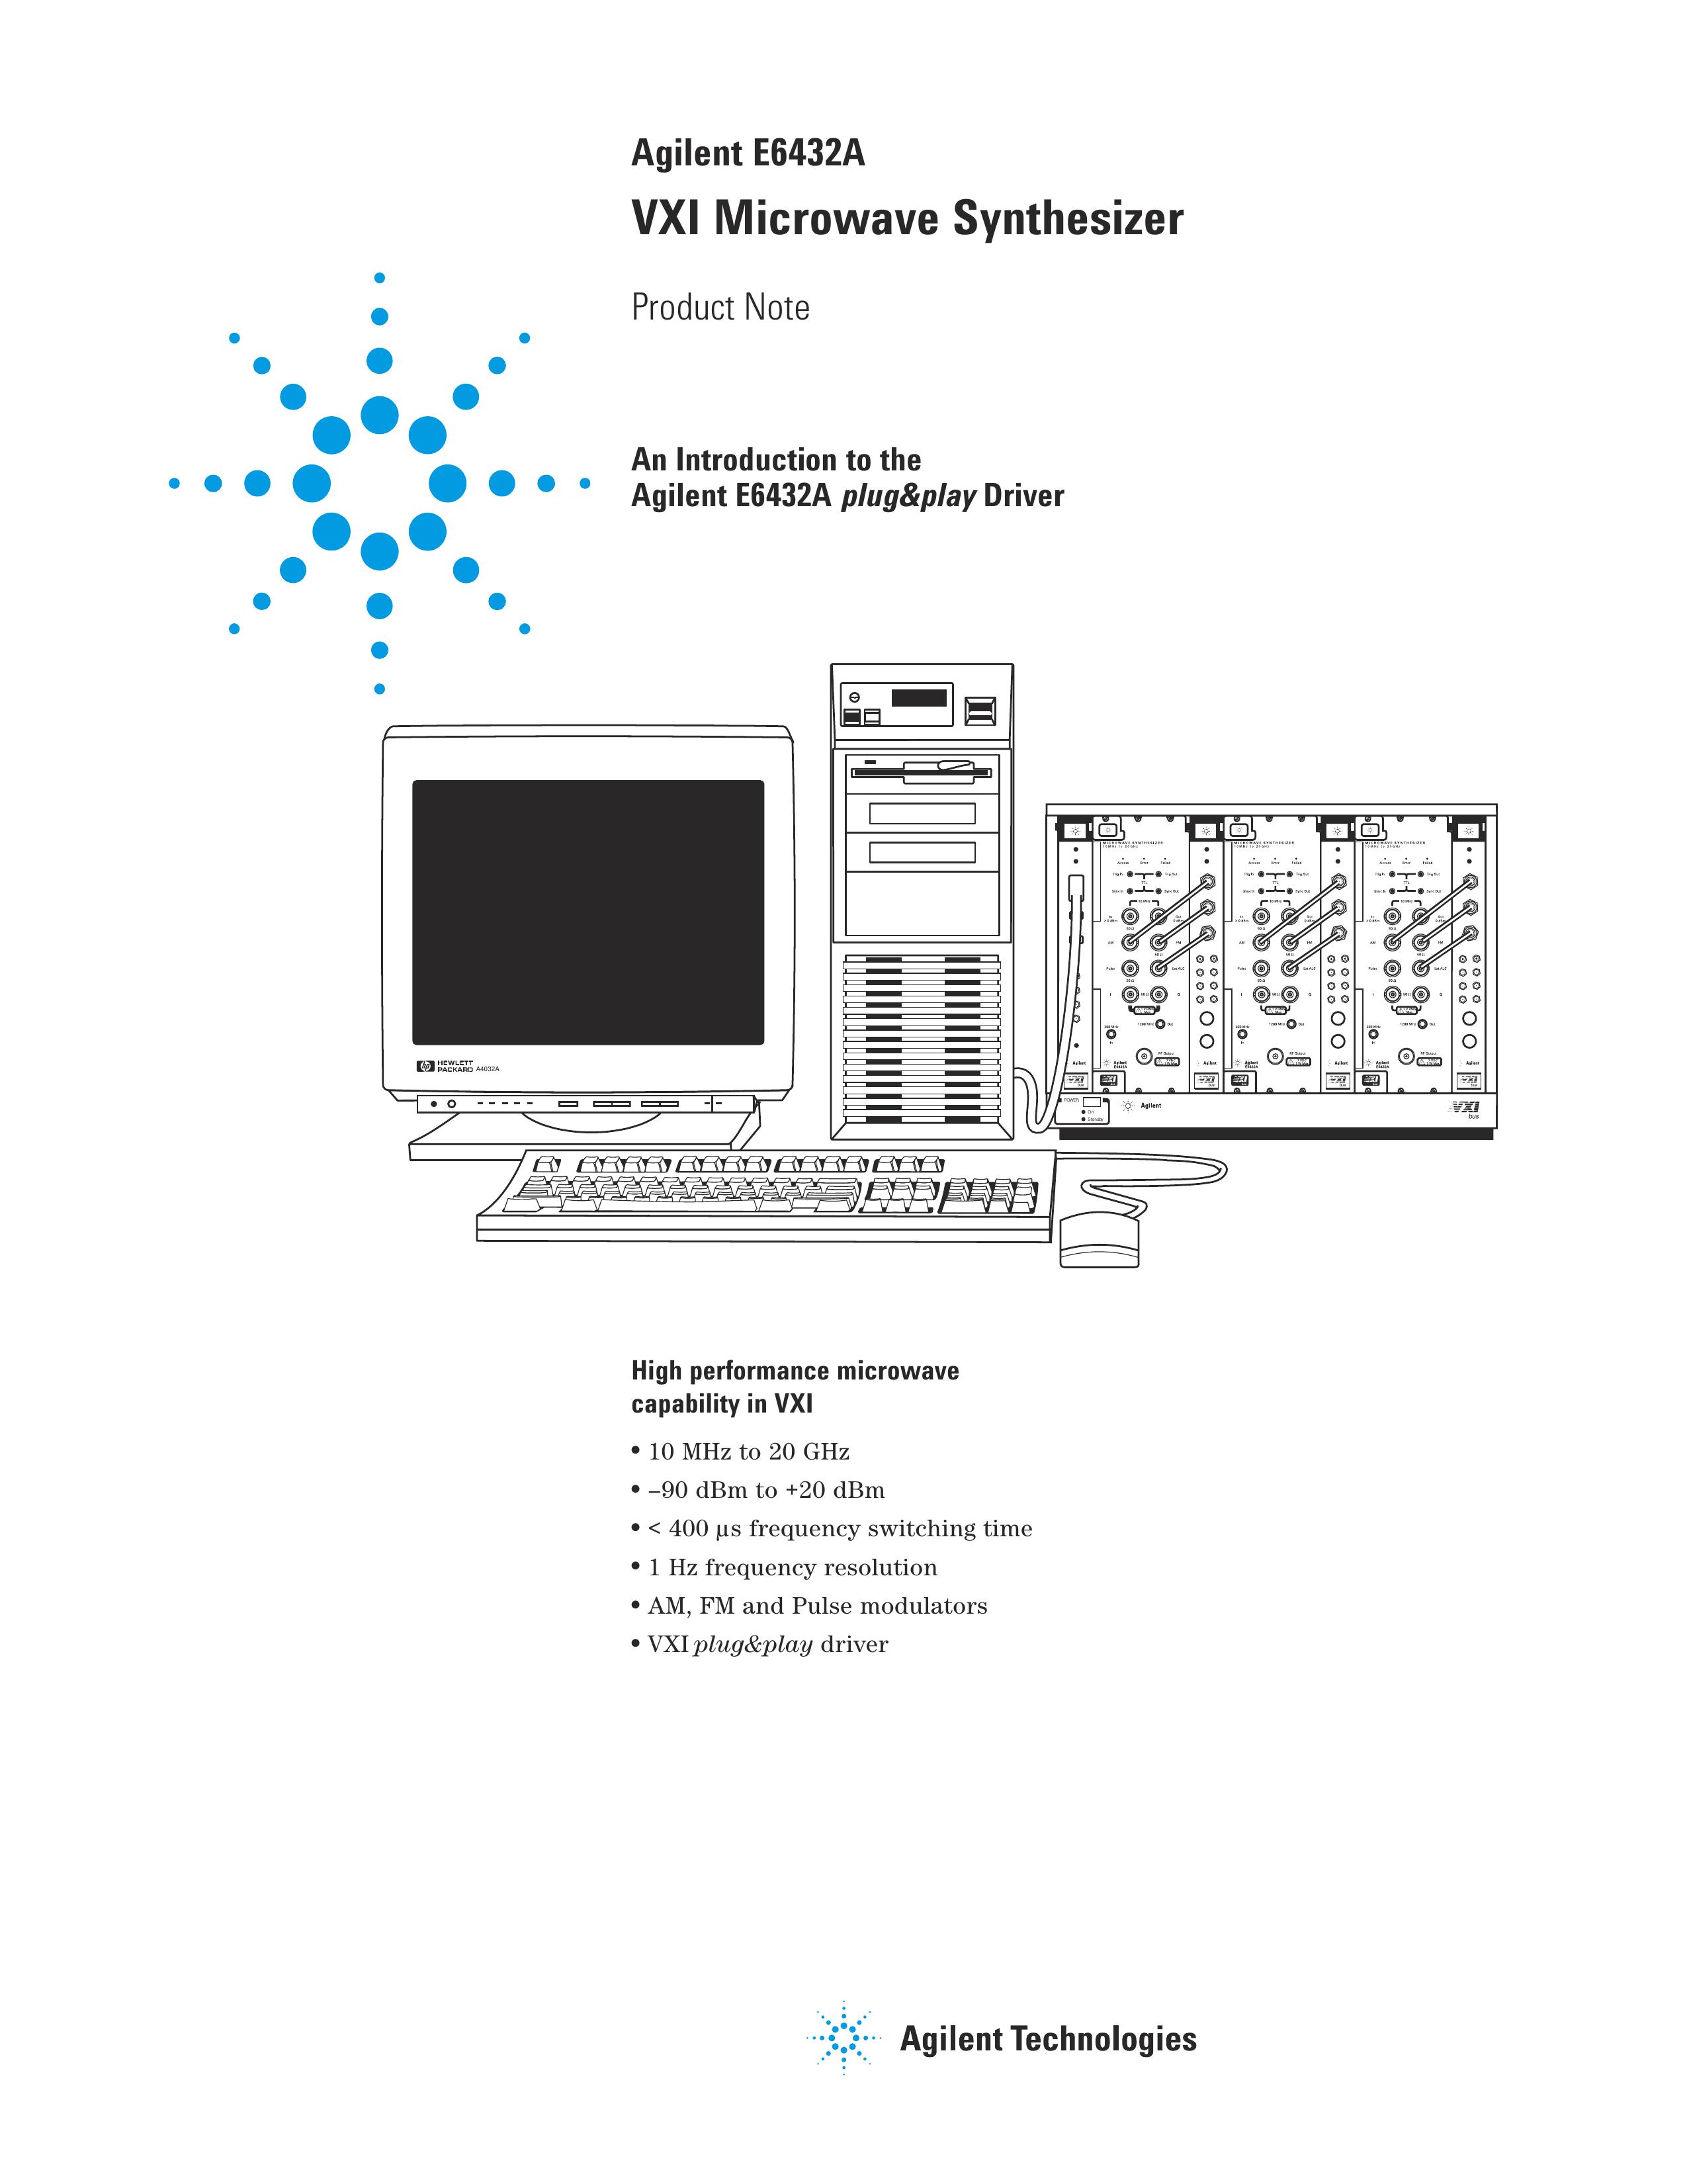 Agilent Technologies E6432A Recording Equipment User Manual